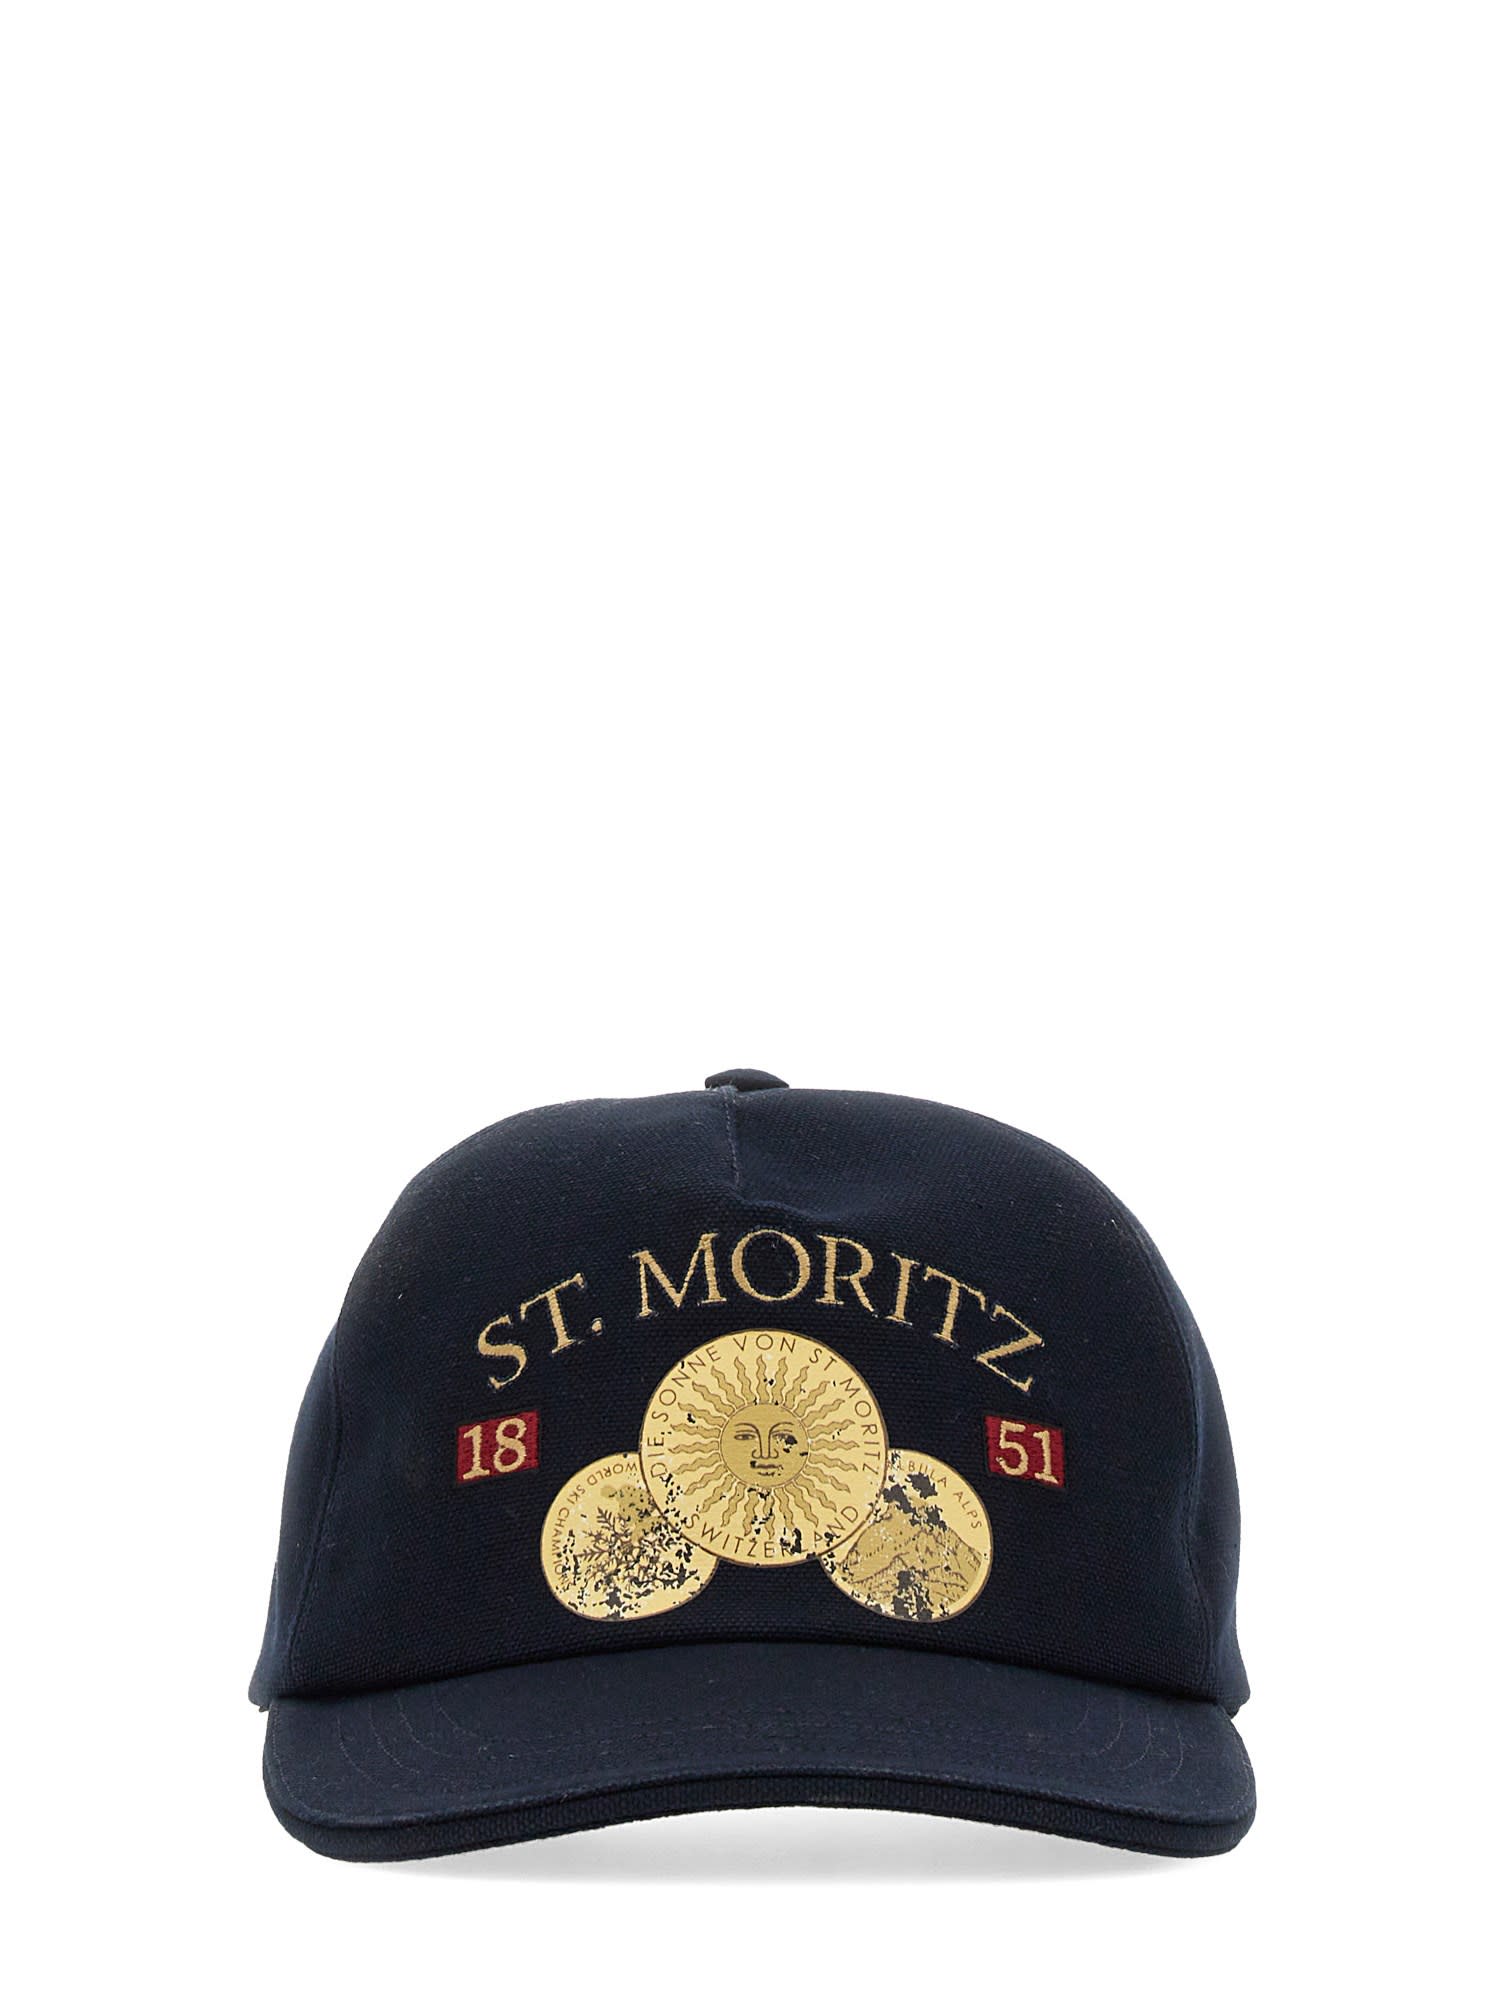 BALLY BASEBALL CAP ST. MORITZ